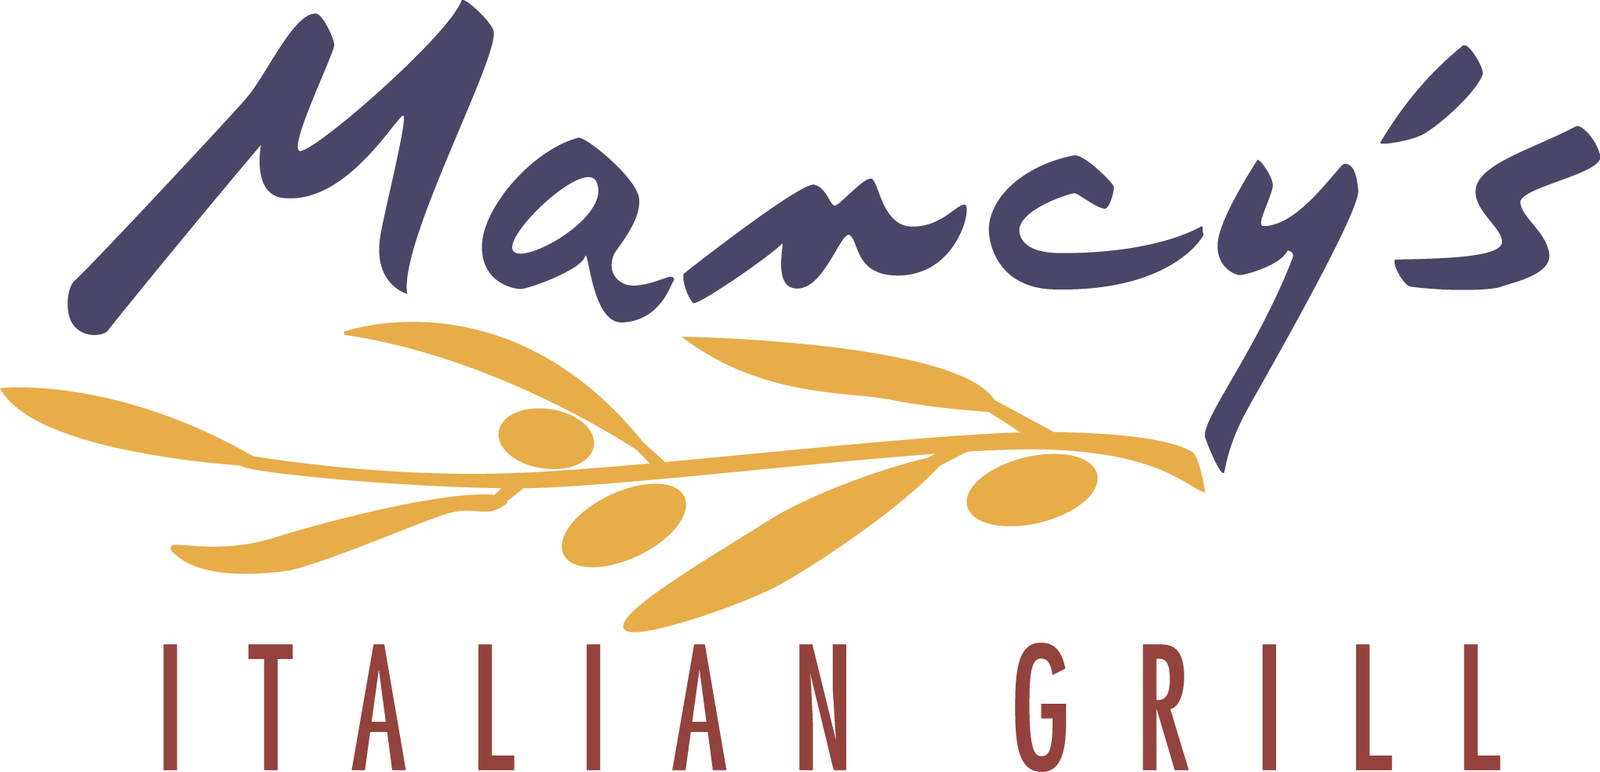 Mancy's Italian Grill logo.